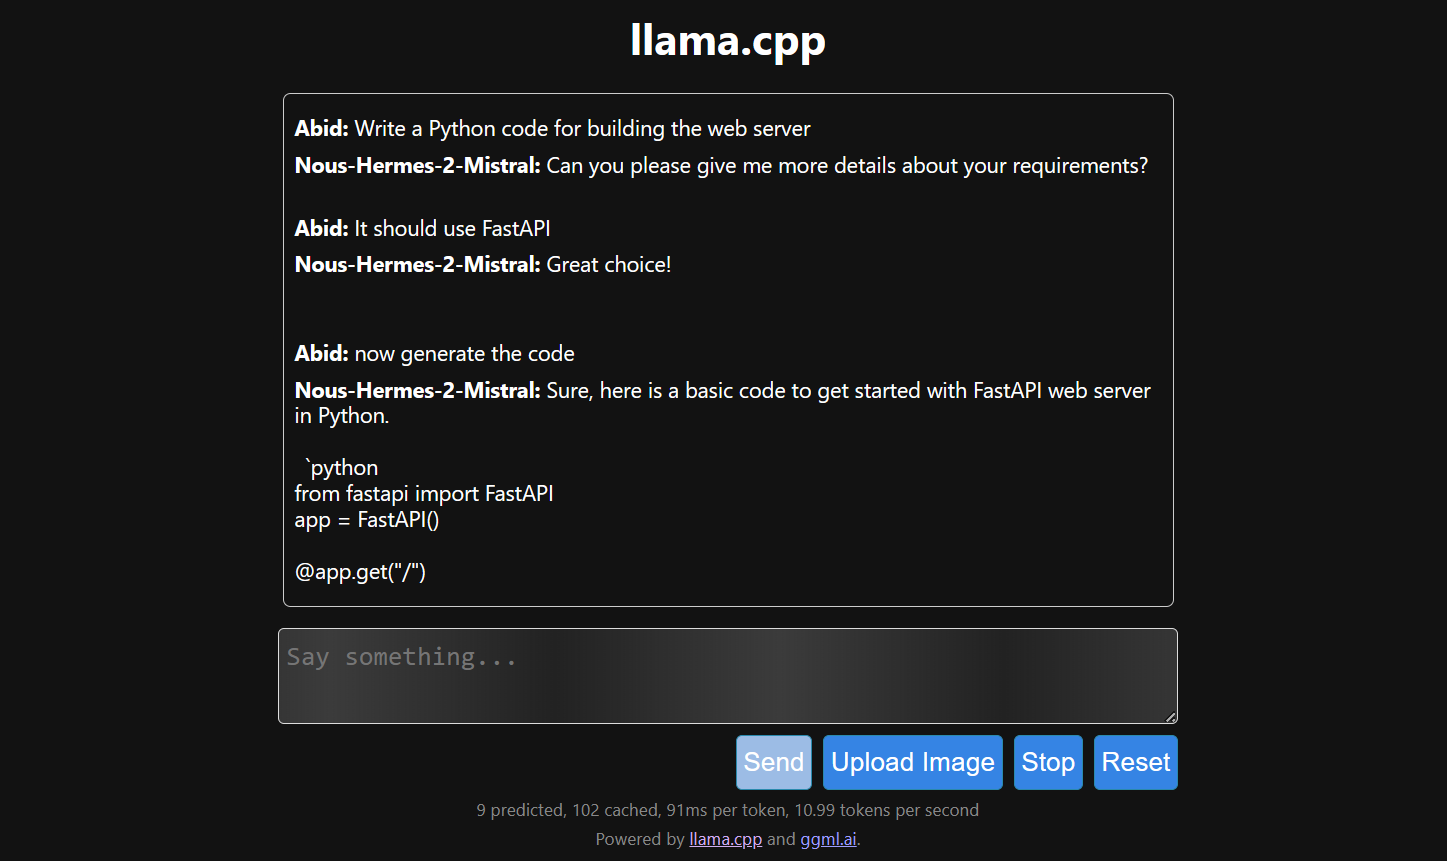 using the llama.cpp web application